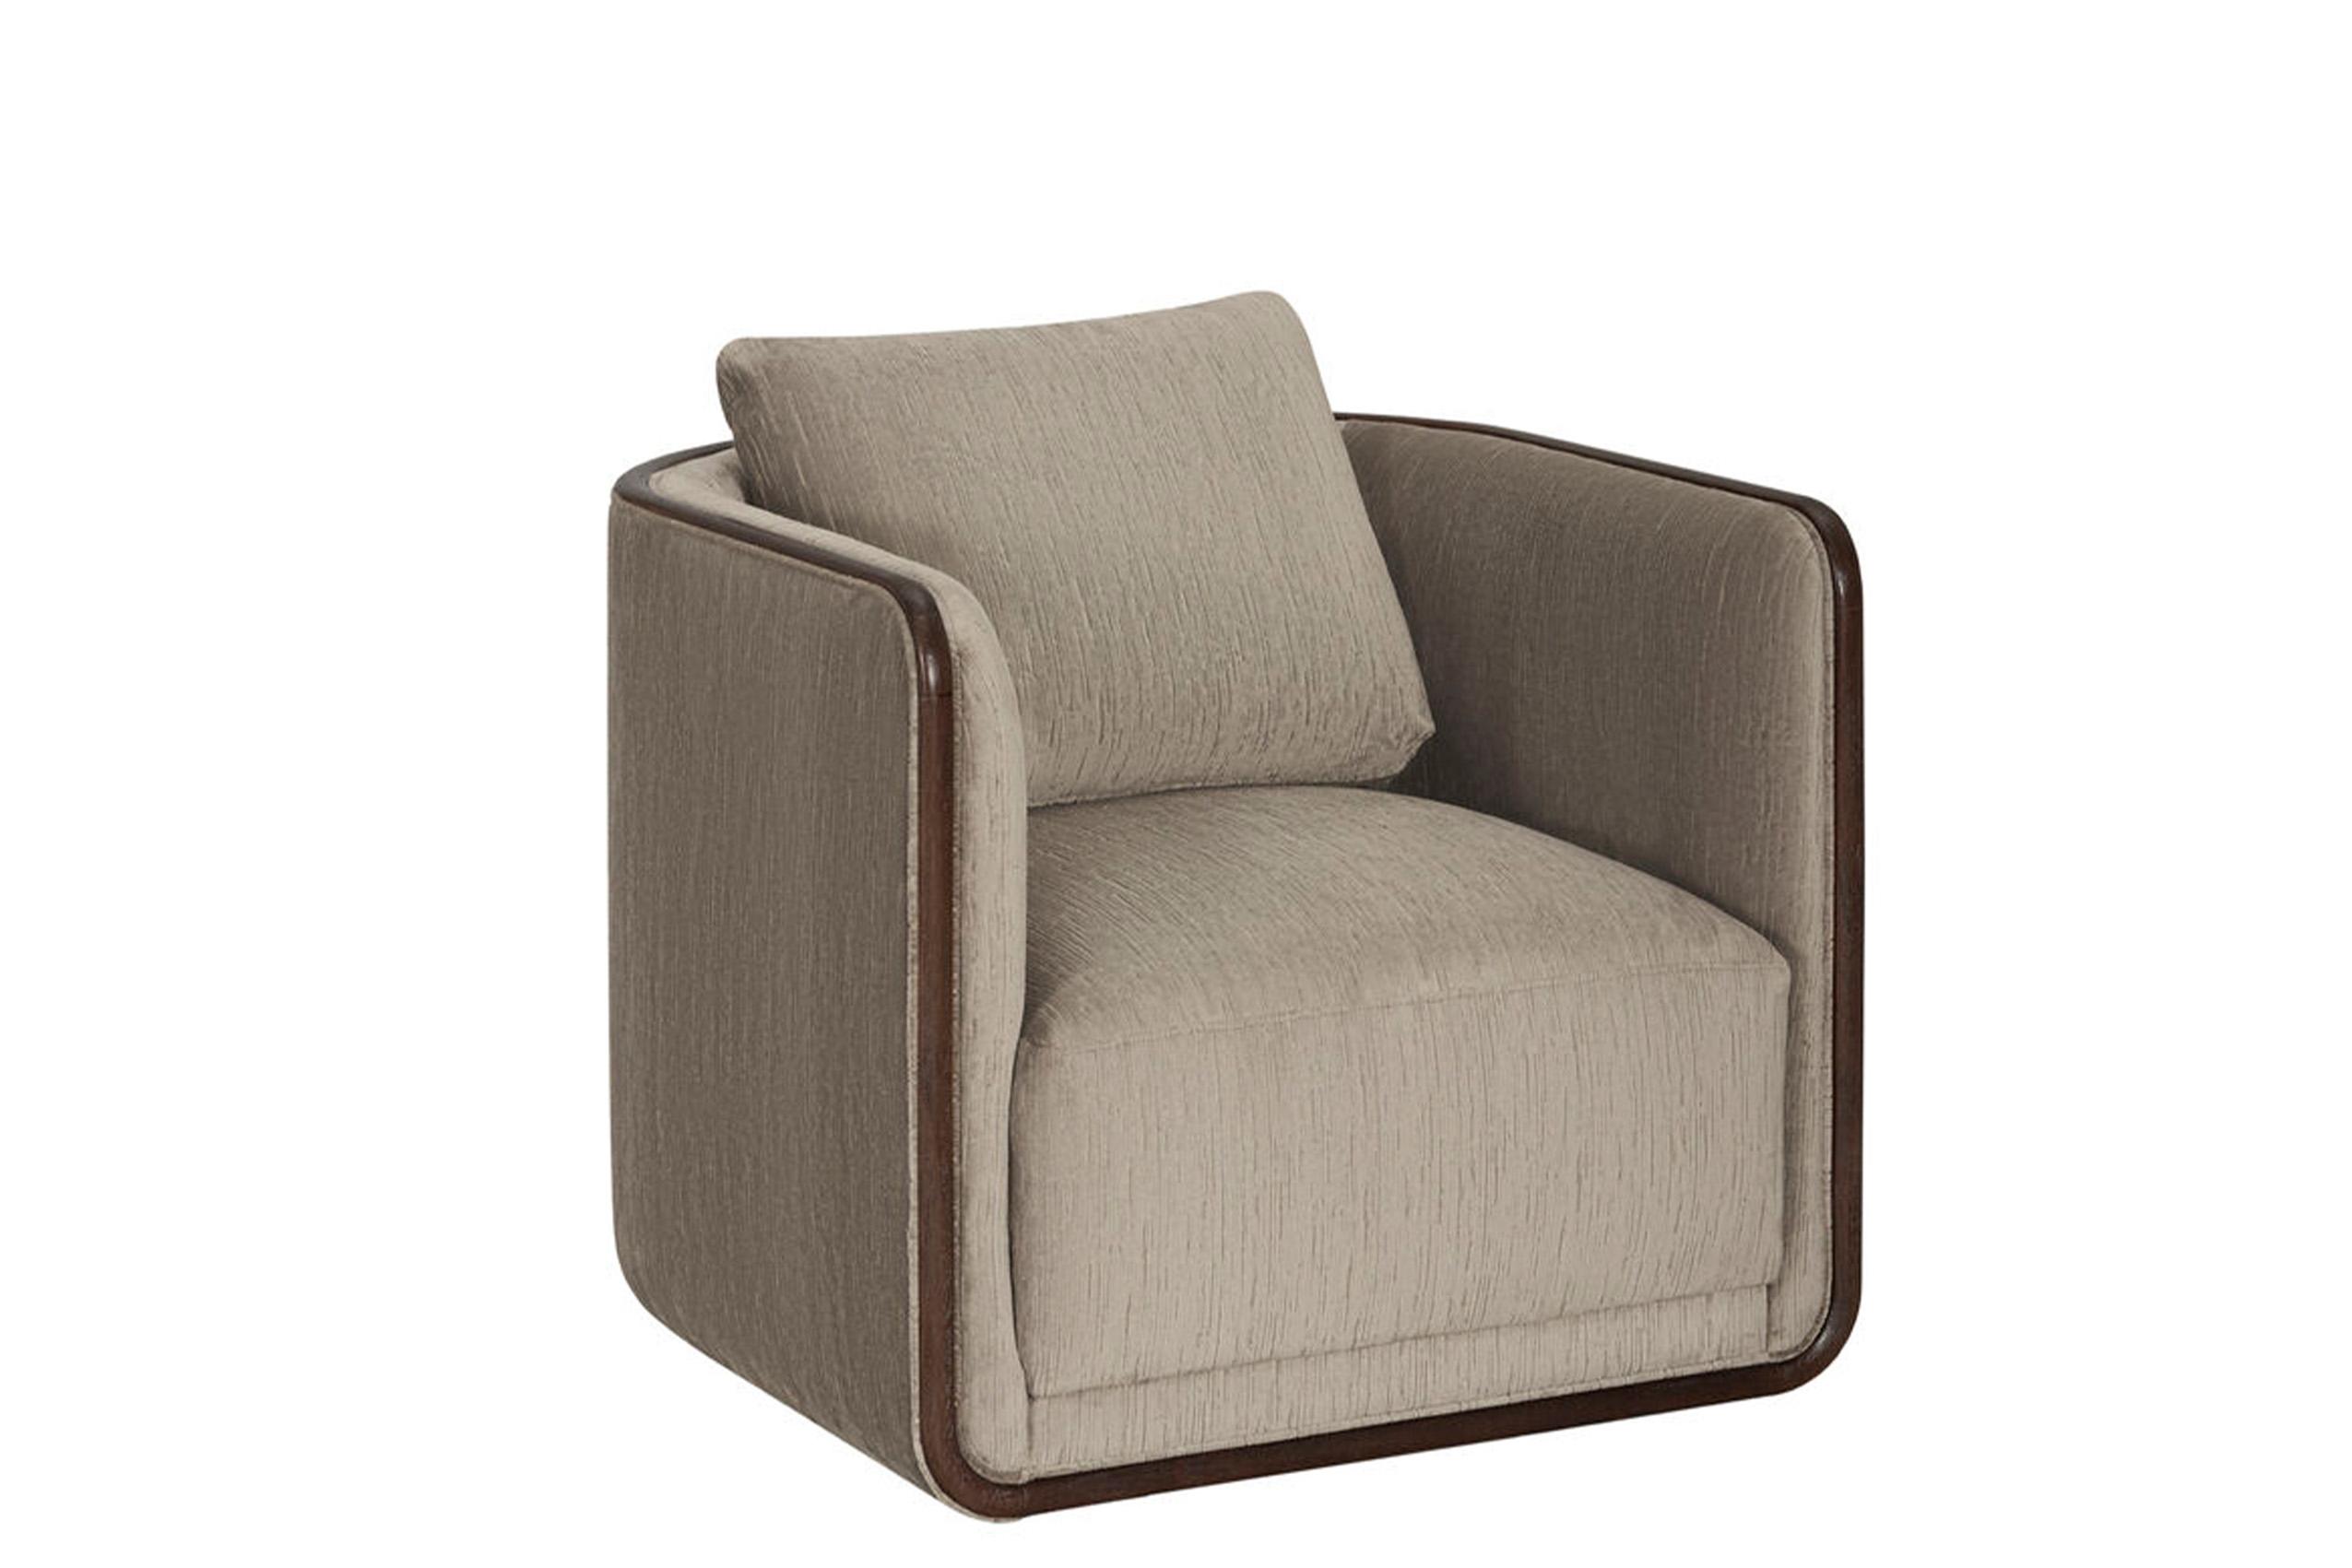 Contemporary, Modern, Casual Swivel Chair Sagrada 764516-5303FJ 764516-5303FJ in Gray Fabric